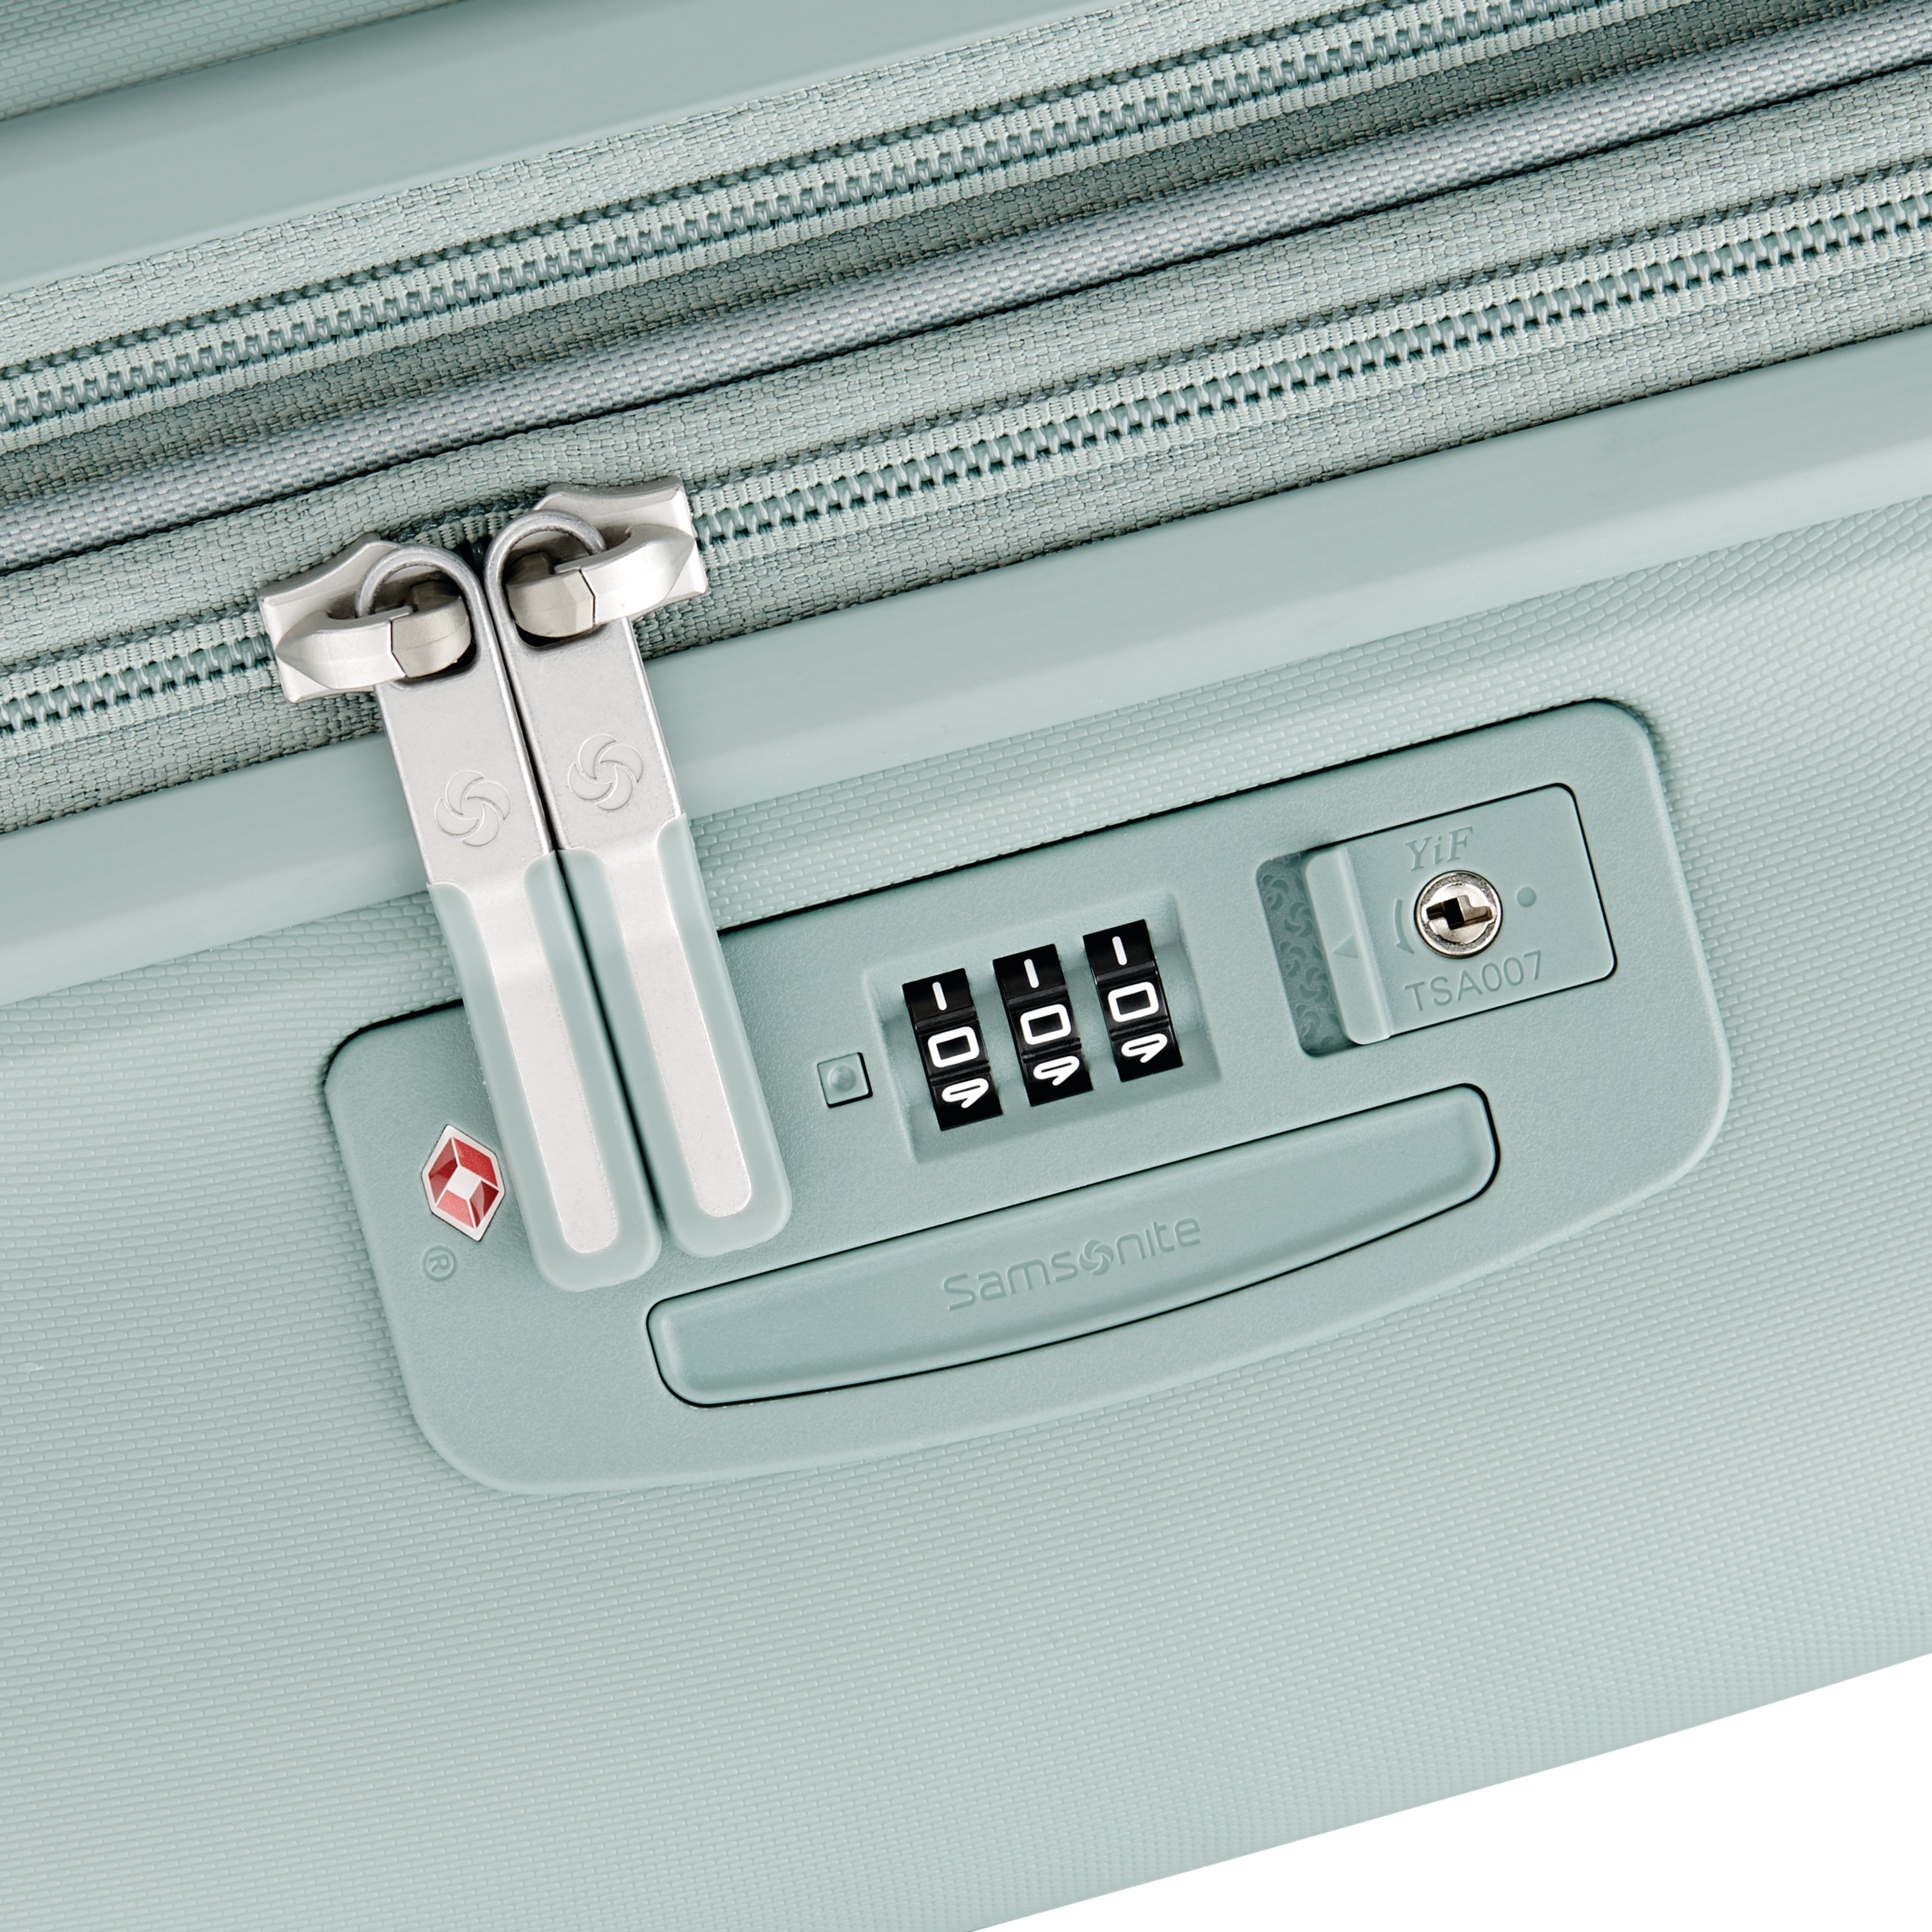 Samsonite Designer Luggage ID Tag - Pair Stars/Stripes